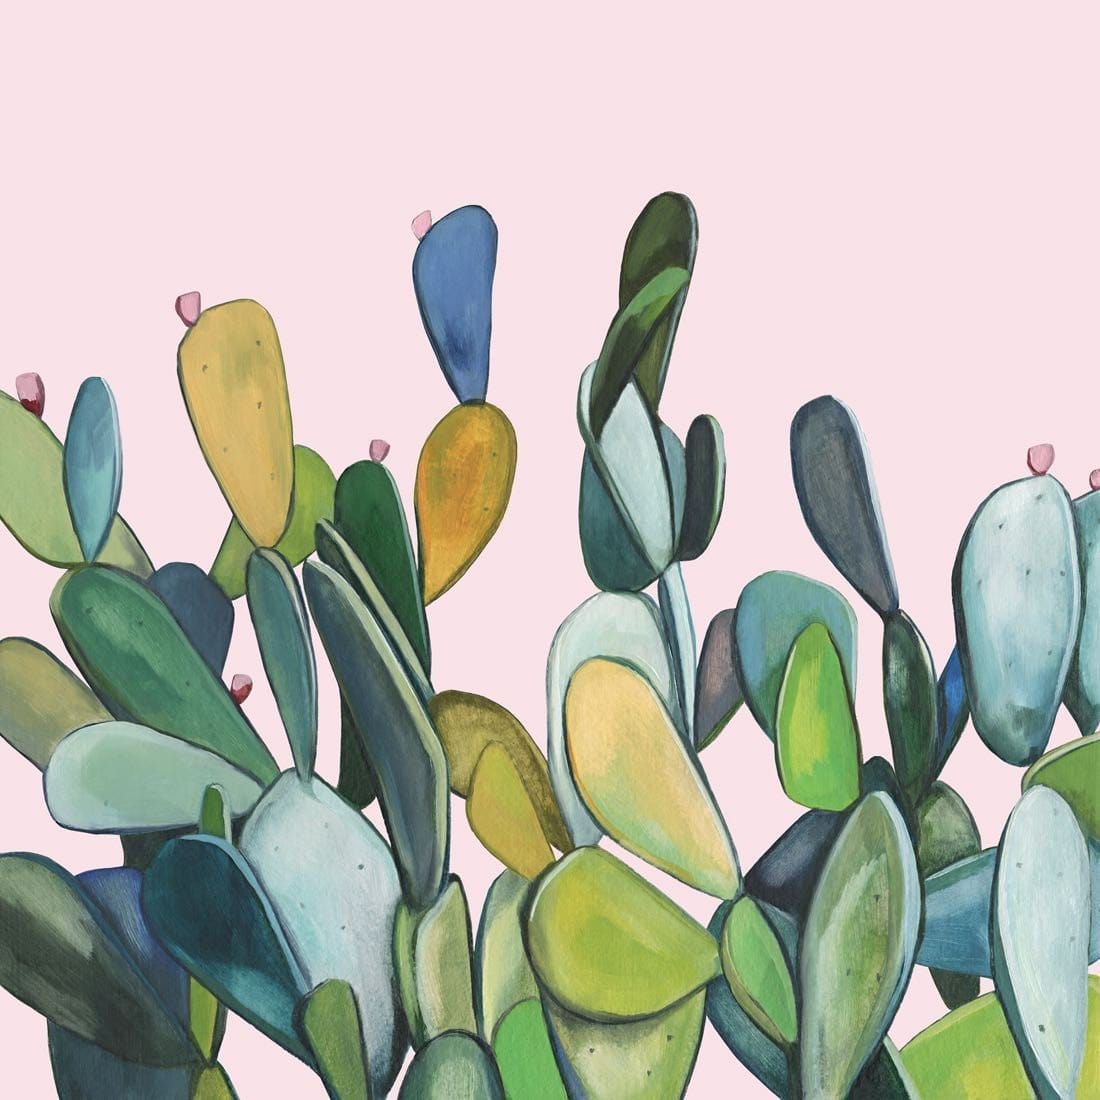 Cactus Sky - Print-Prints-Kate Jarman-Greenhouse Interiors